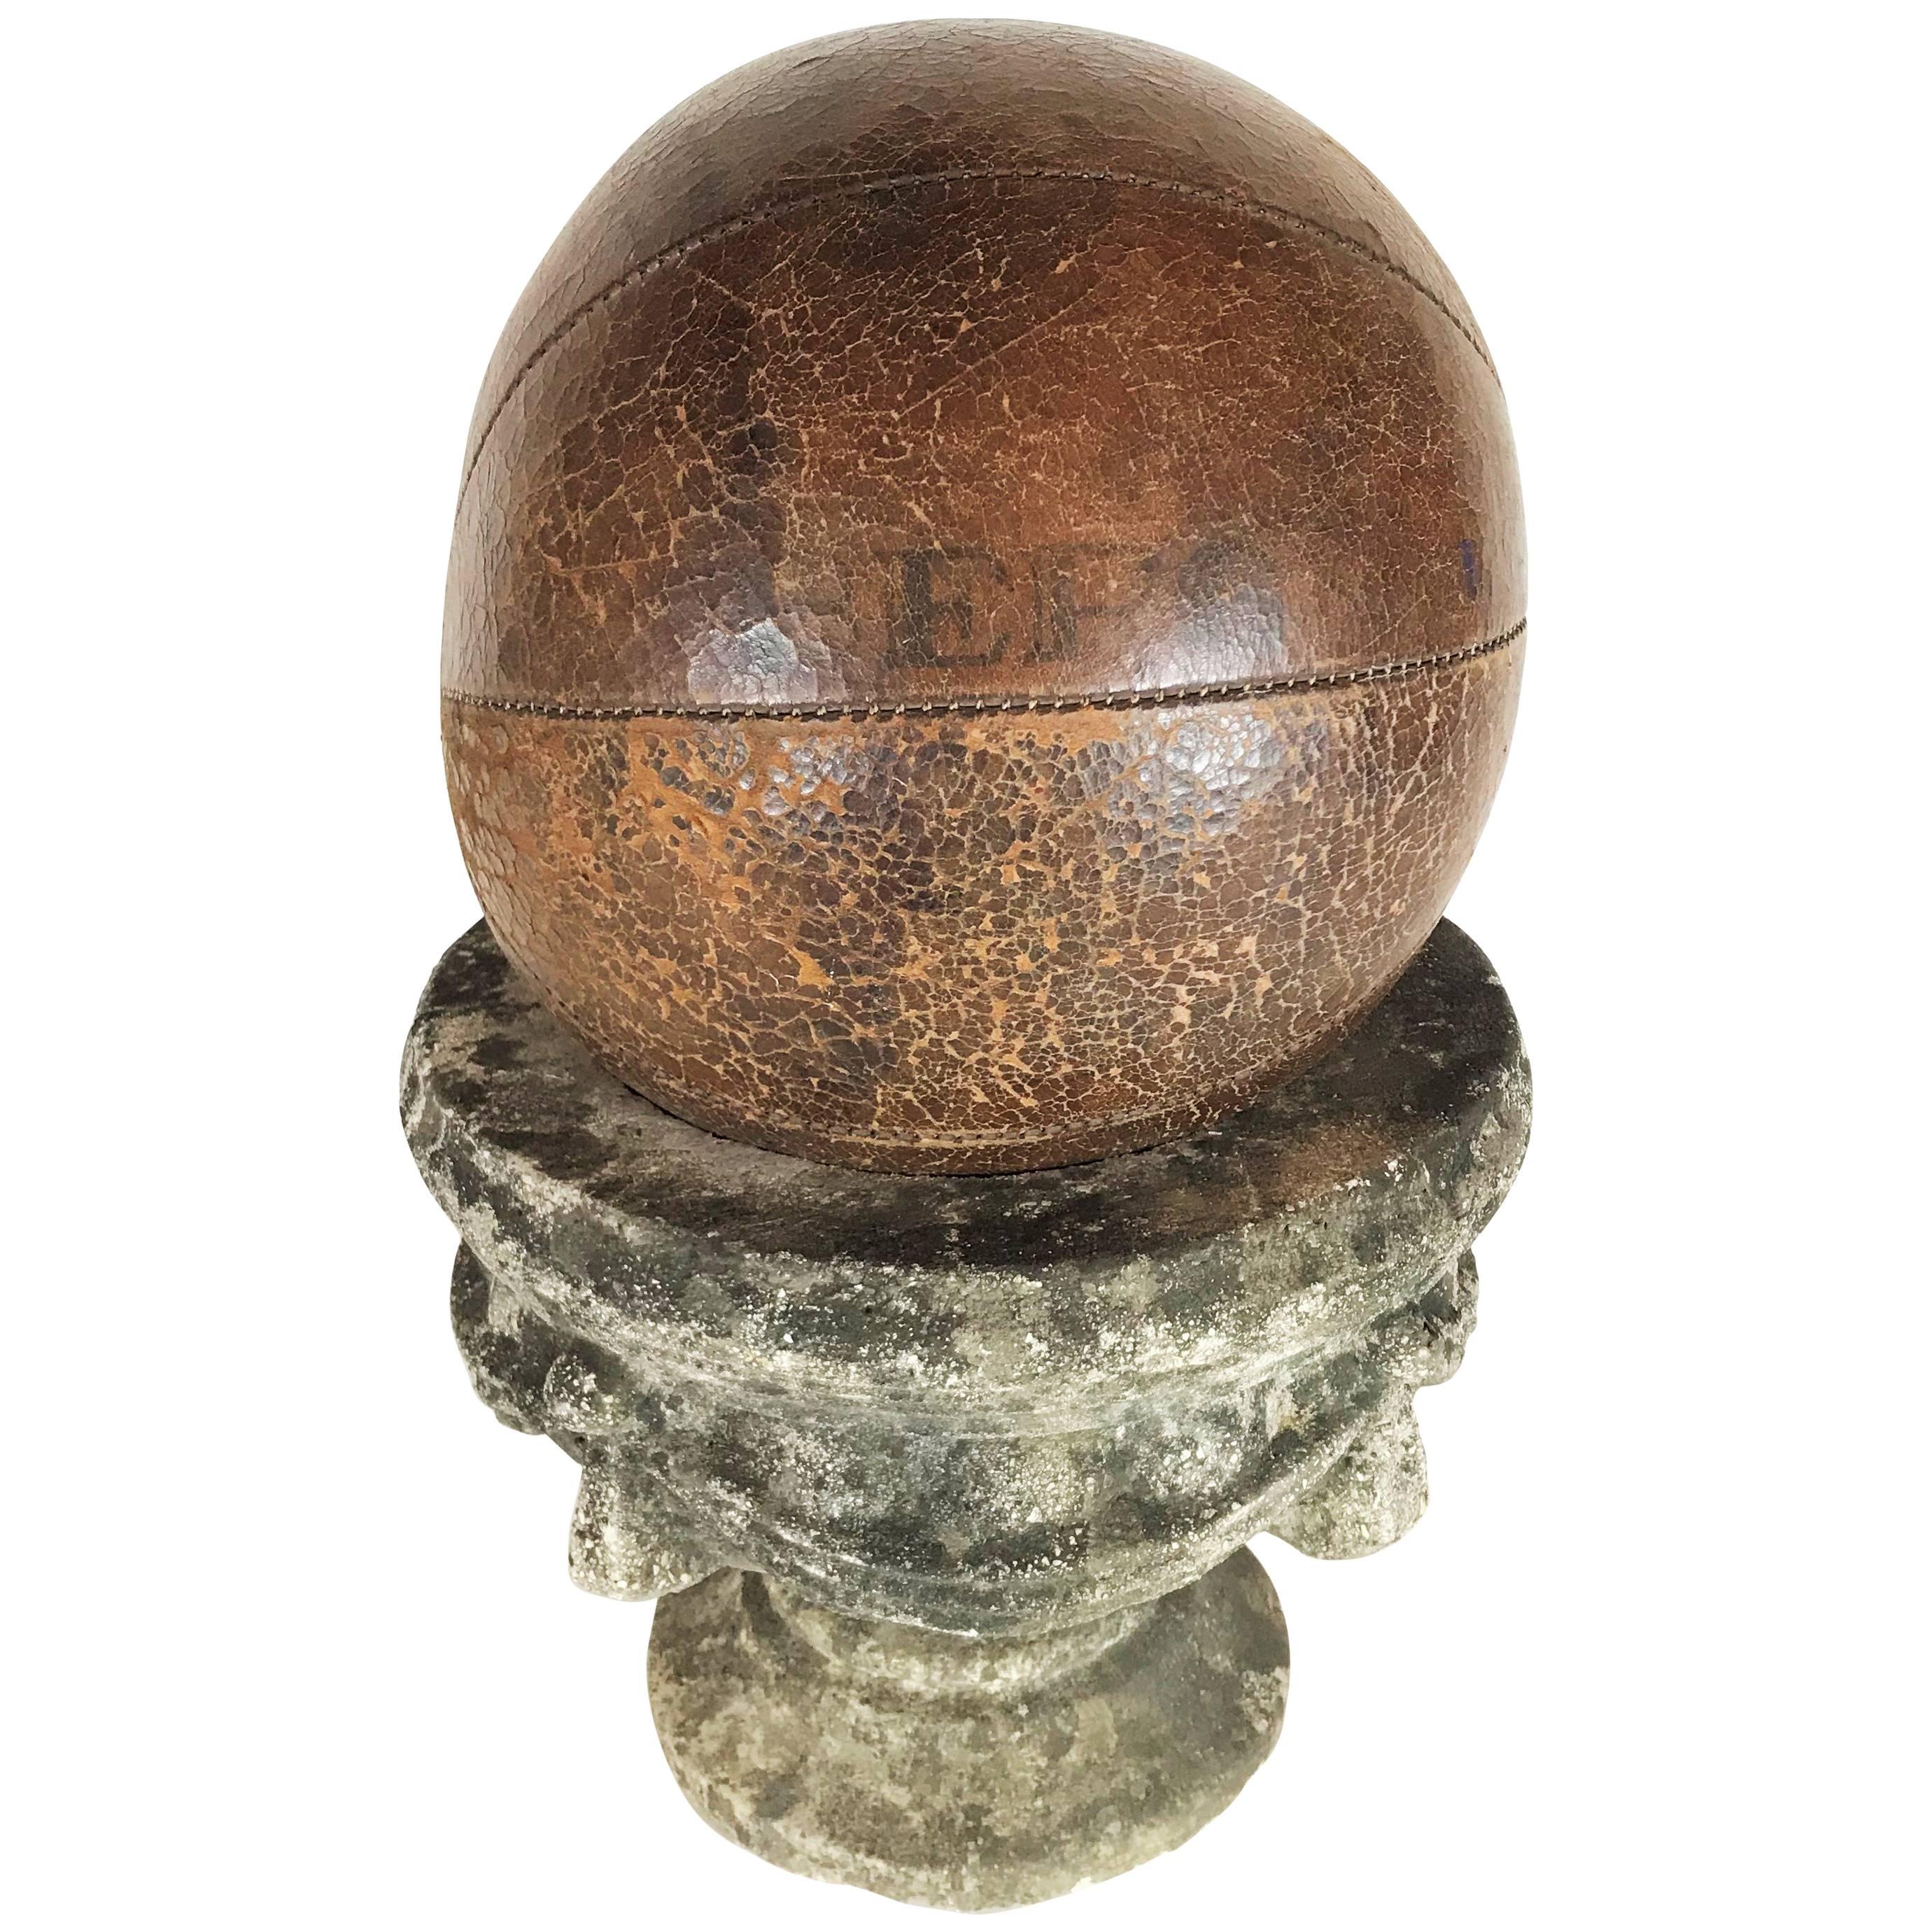 Berg Vintage Leather Medicine Ball, 1920s Germany